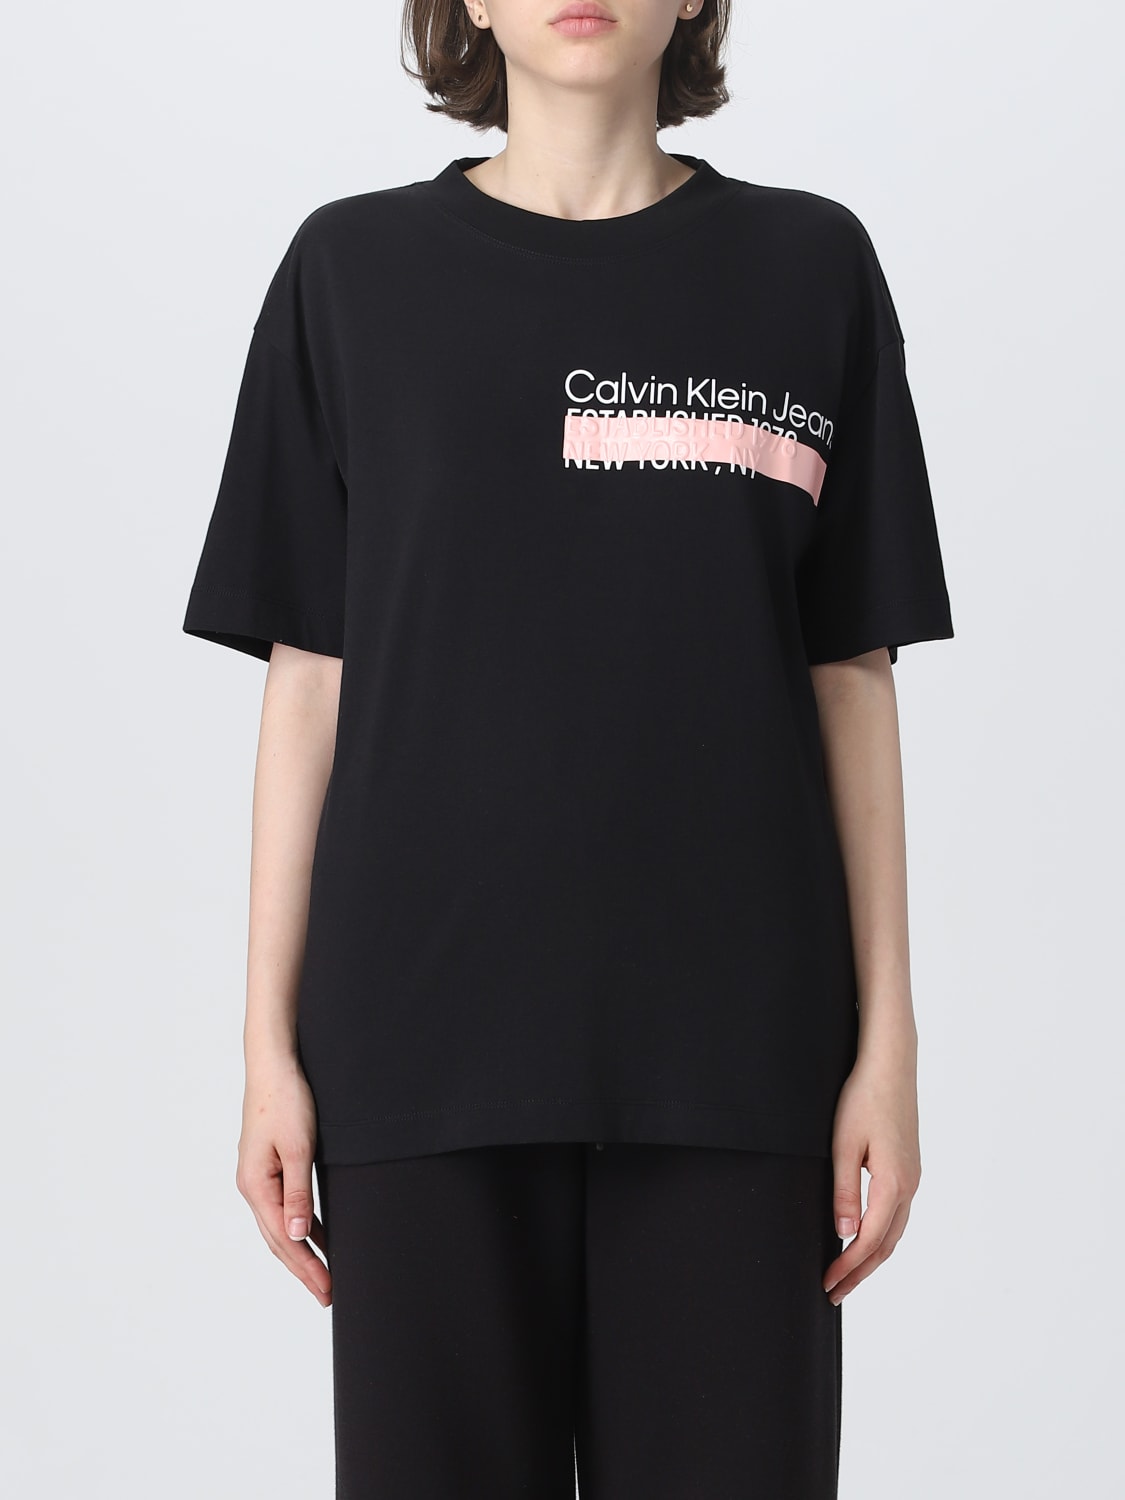 CALVIN KLEIN JEANS: t-shirt for women - Black | Calvin Klein Jeans t ...